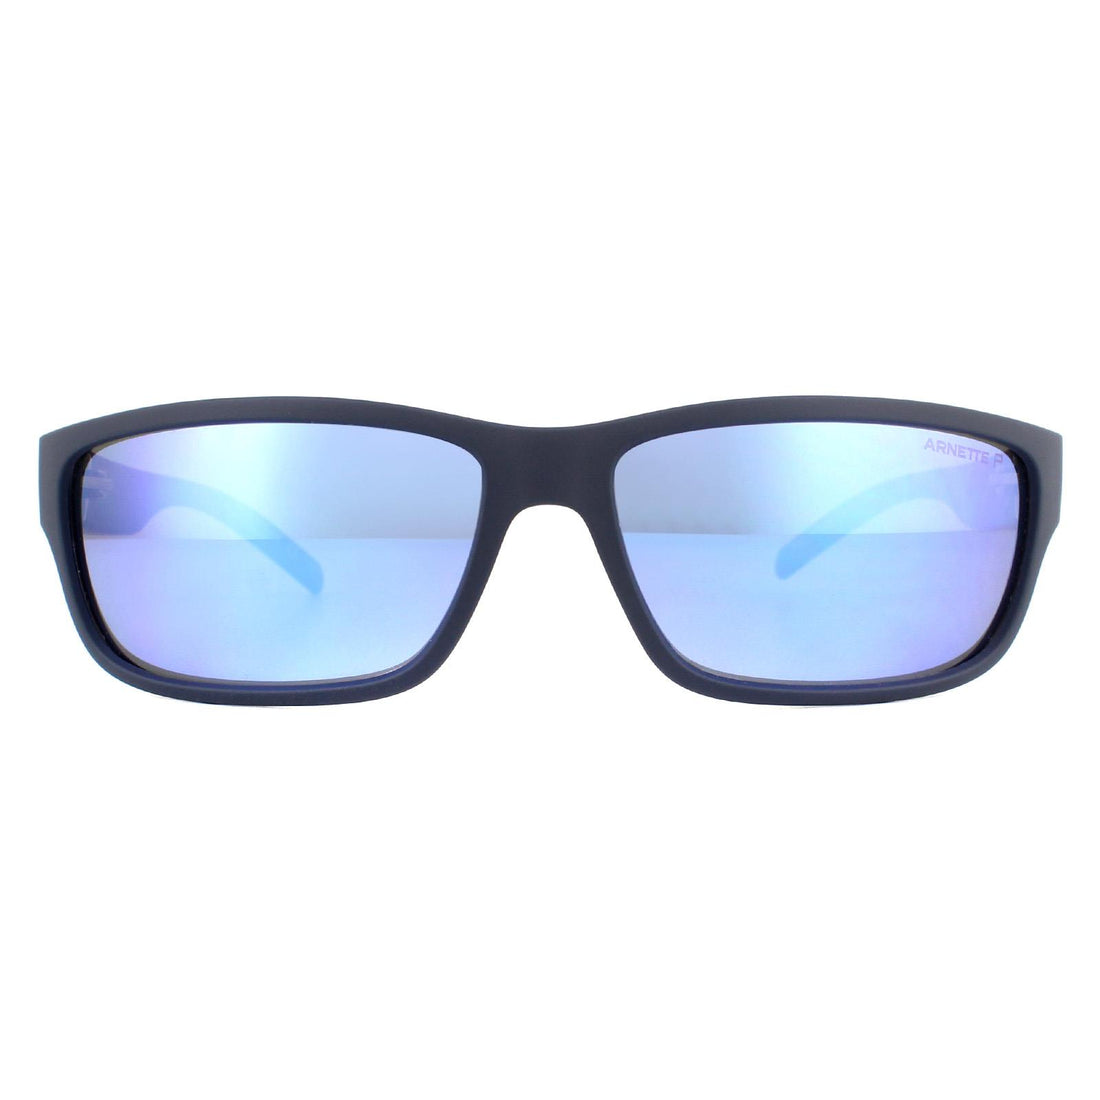 Arnette Sunglasses Zoro AN4271 258722 Matte Blue Dark Grey Mirror Water Polarized